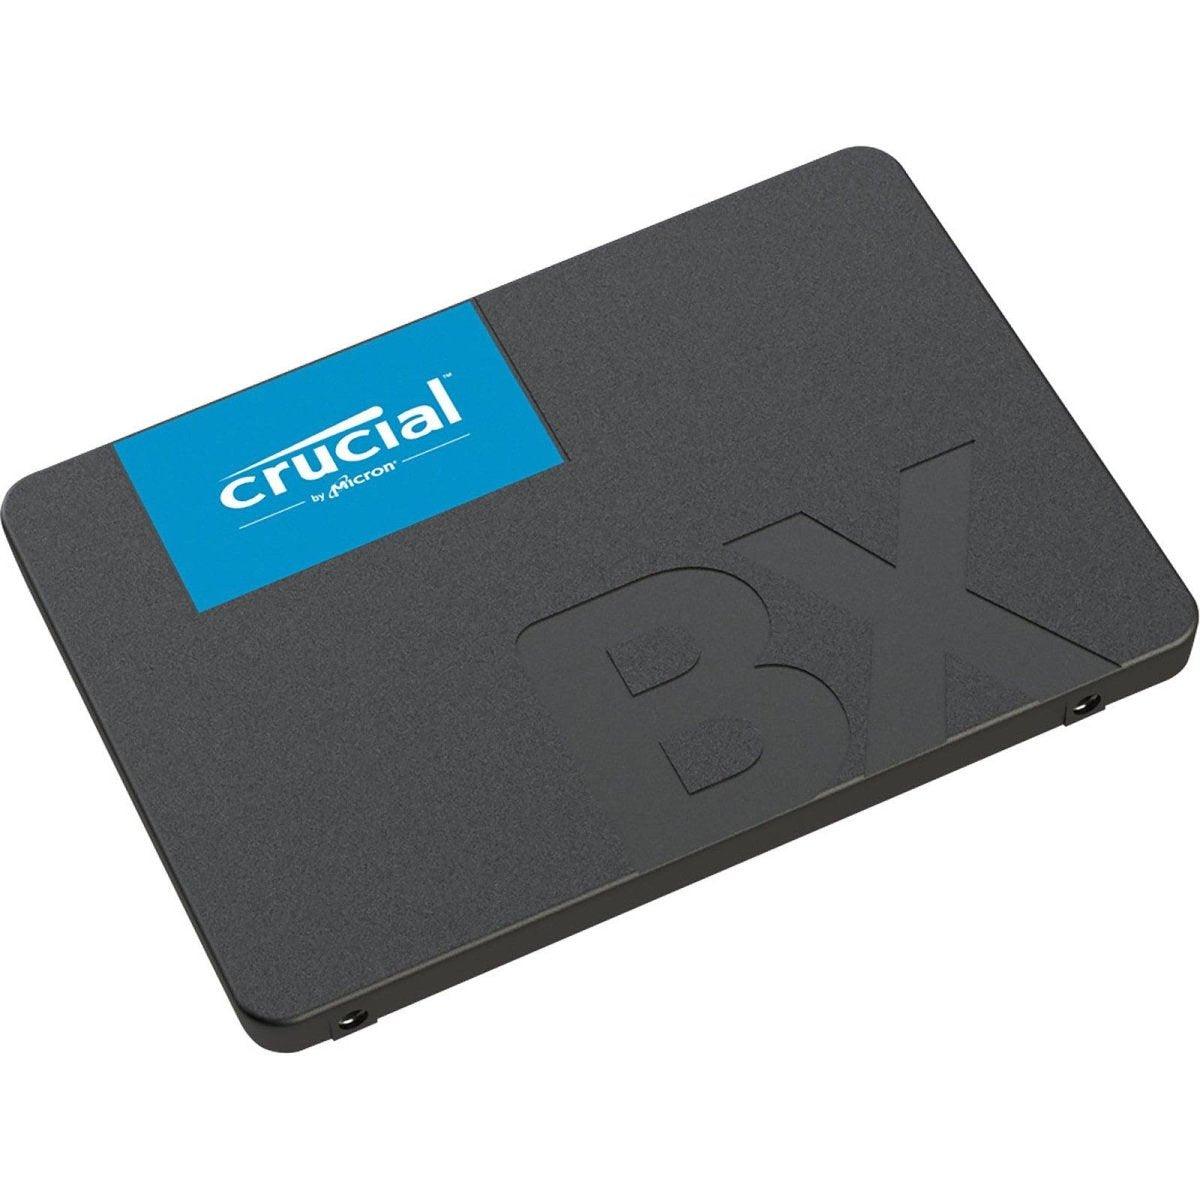 Disque Dur SSD Crucial BX500 120 Go Maroc Prix pas cher - smartmarket.ma